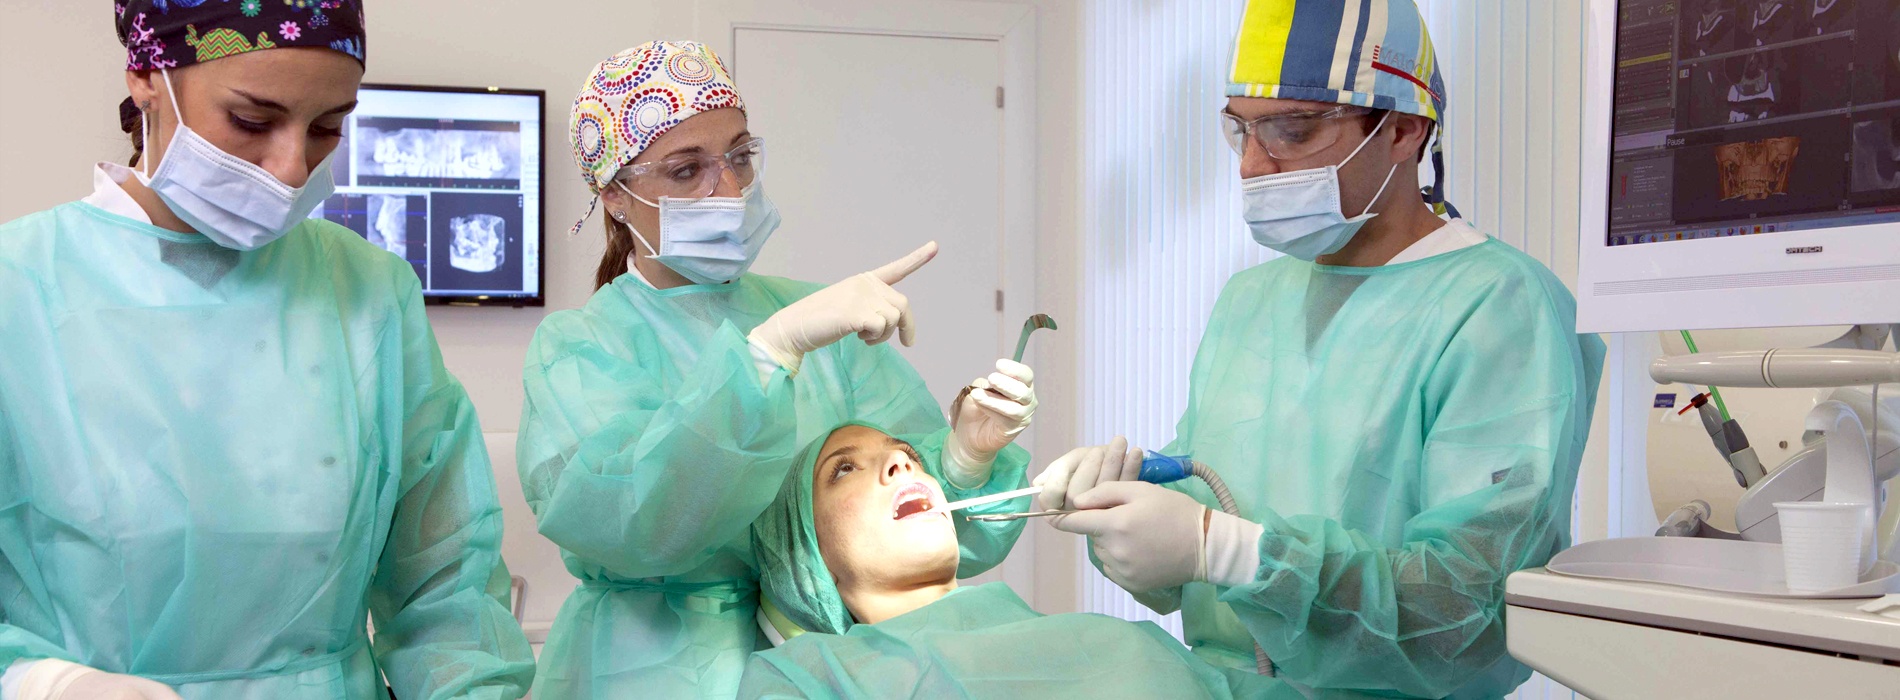 clinica dental torremolinos centro